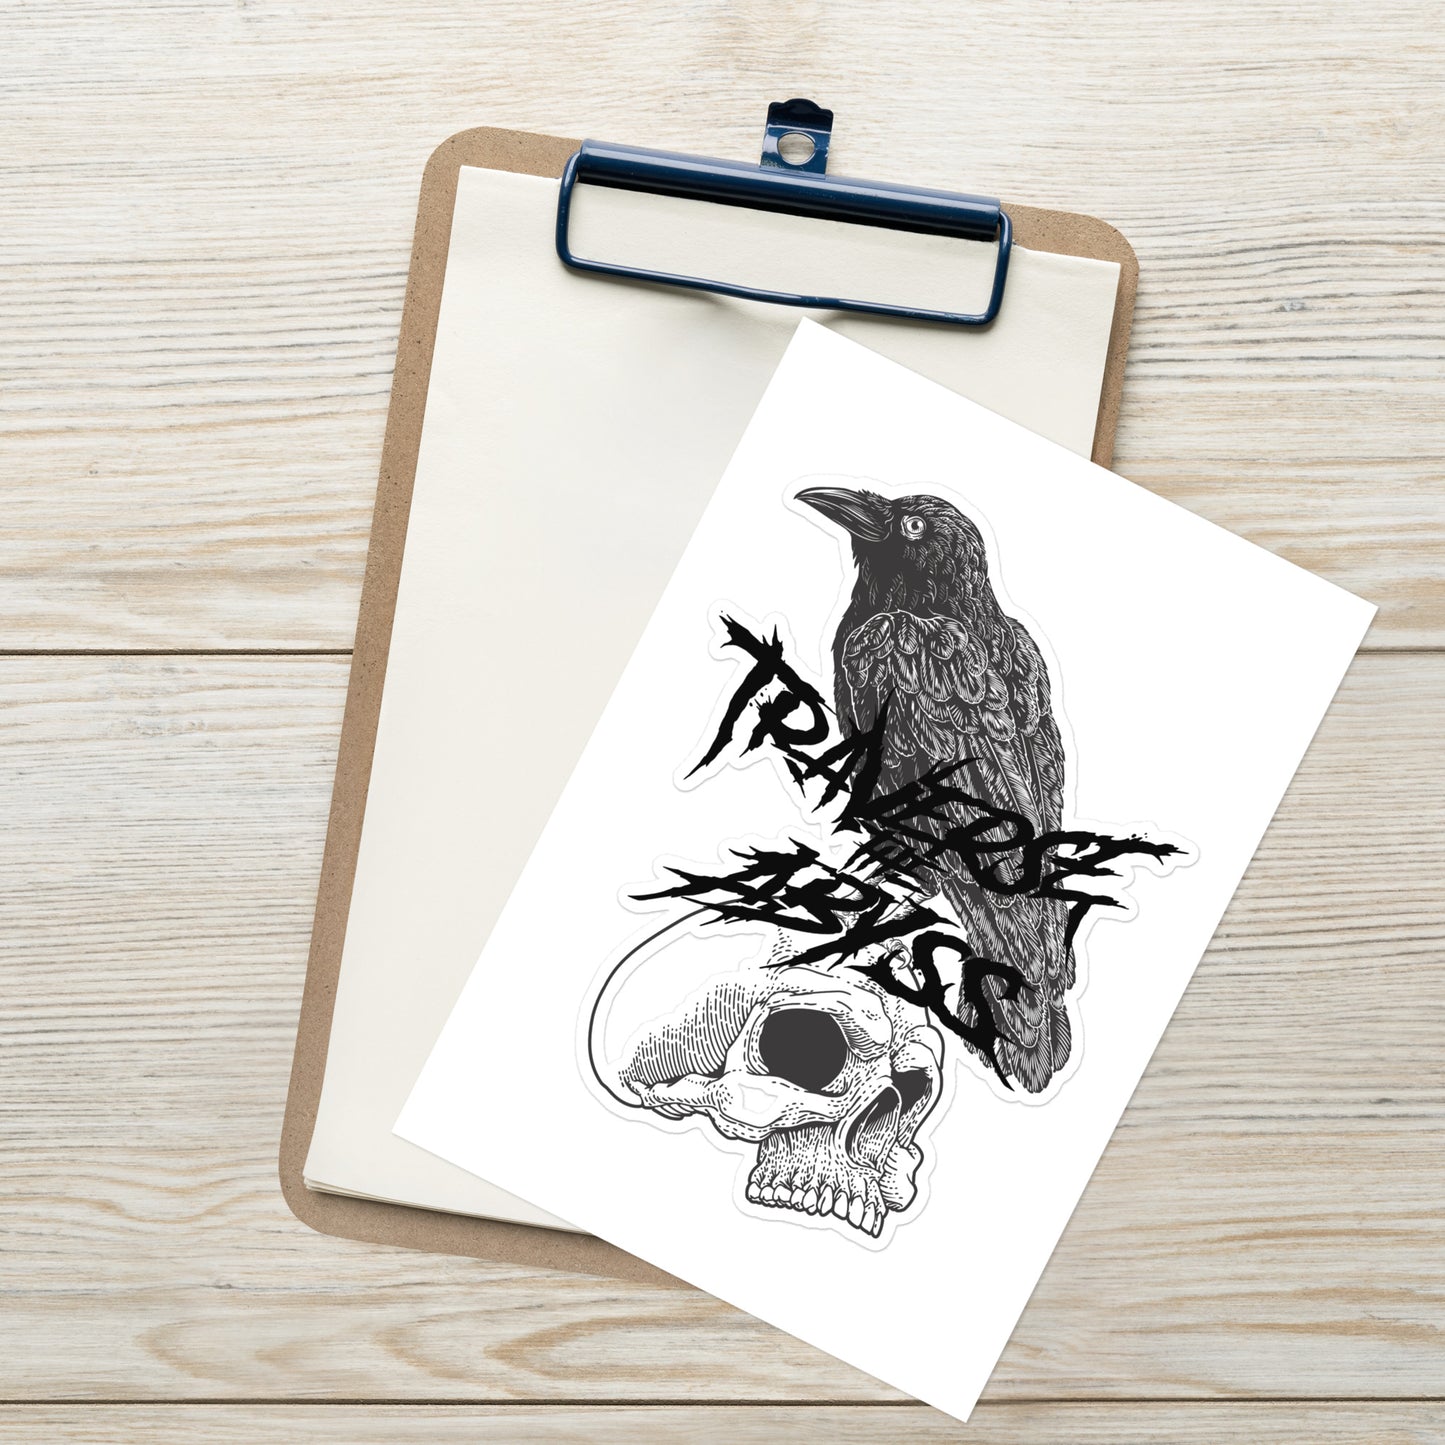 The Raven Sticker sheet